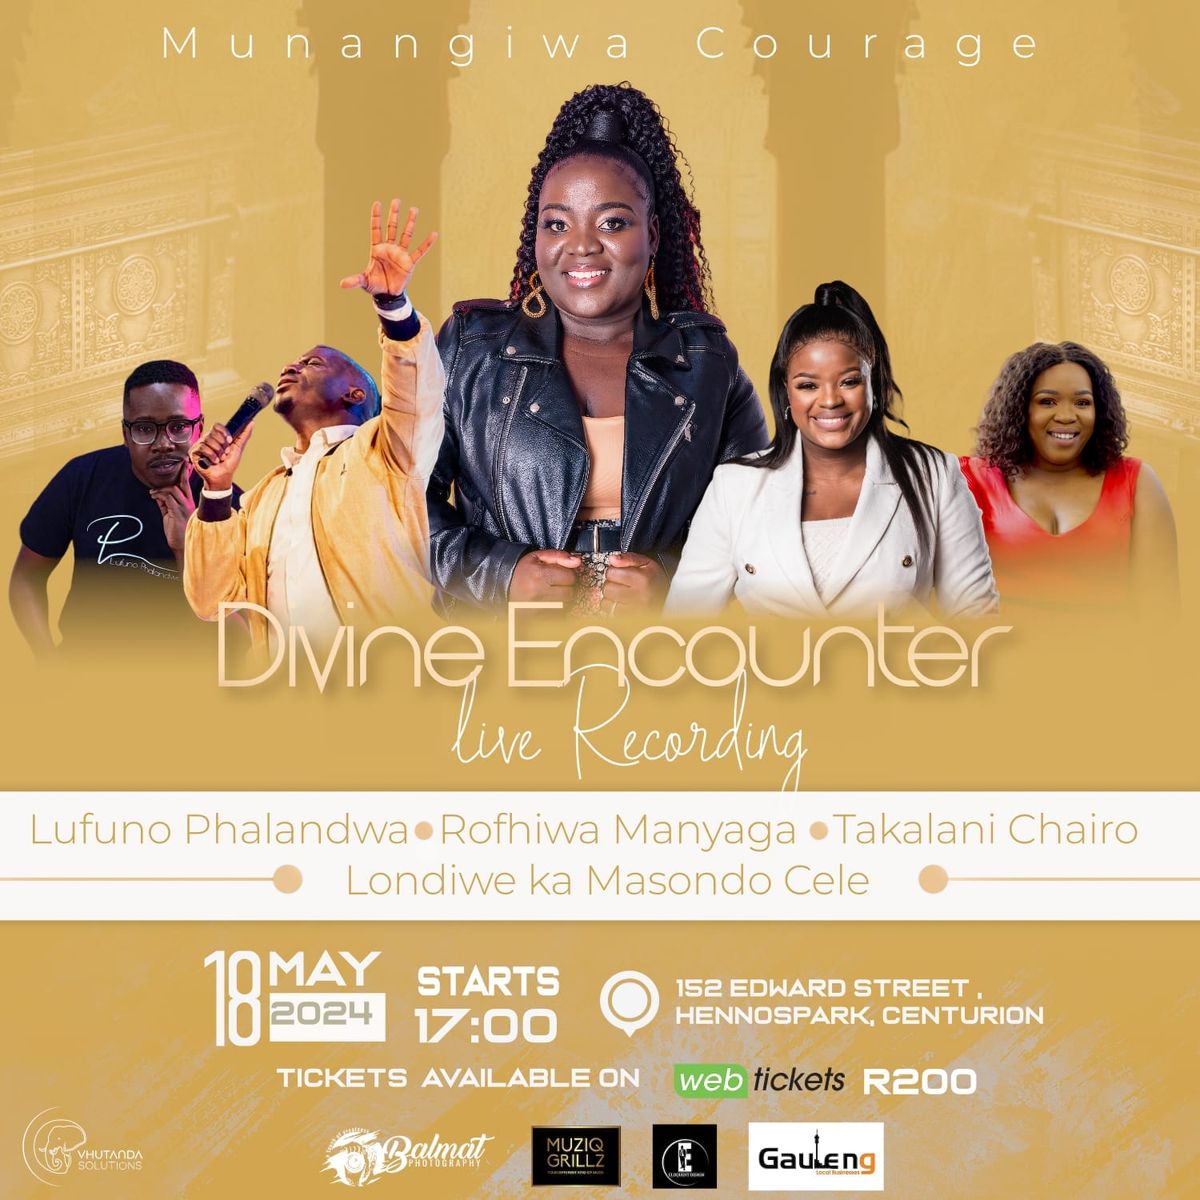 Munangiwa Courage's Live Recording 